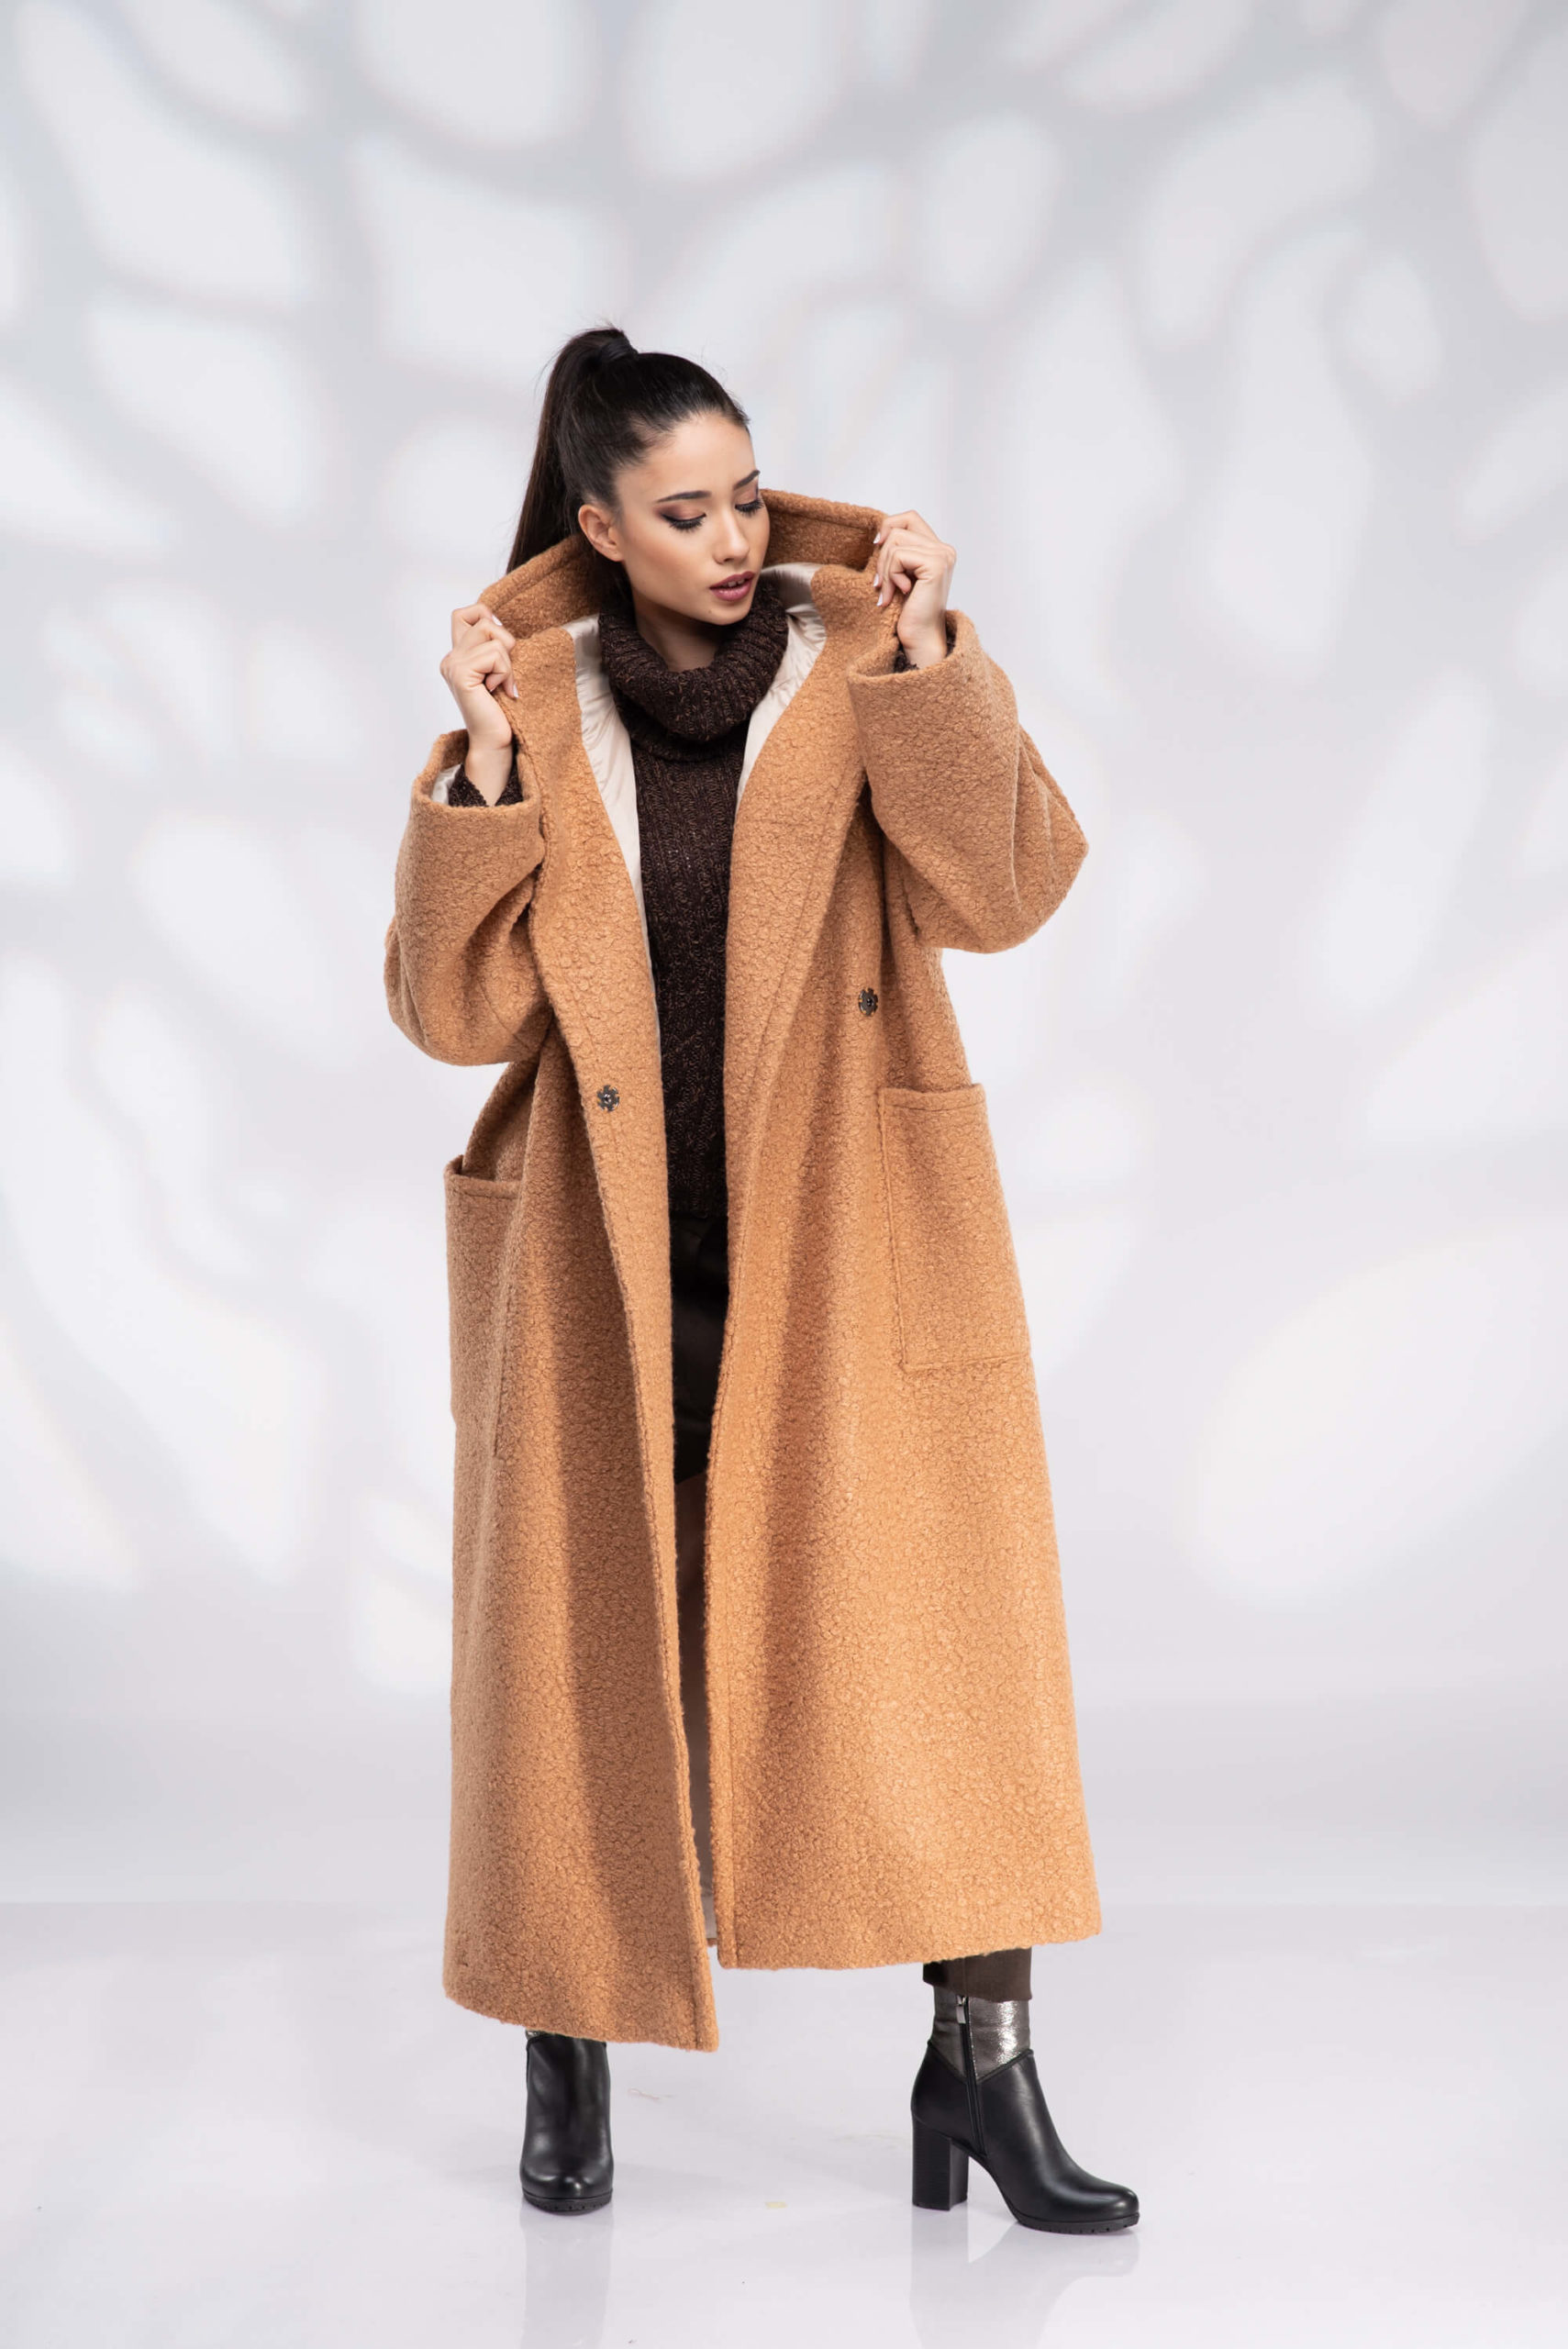 Women Long Sleeve Maxi Dress Coat Floor Length Jacket Plus Size